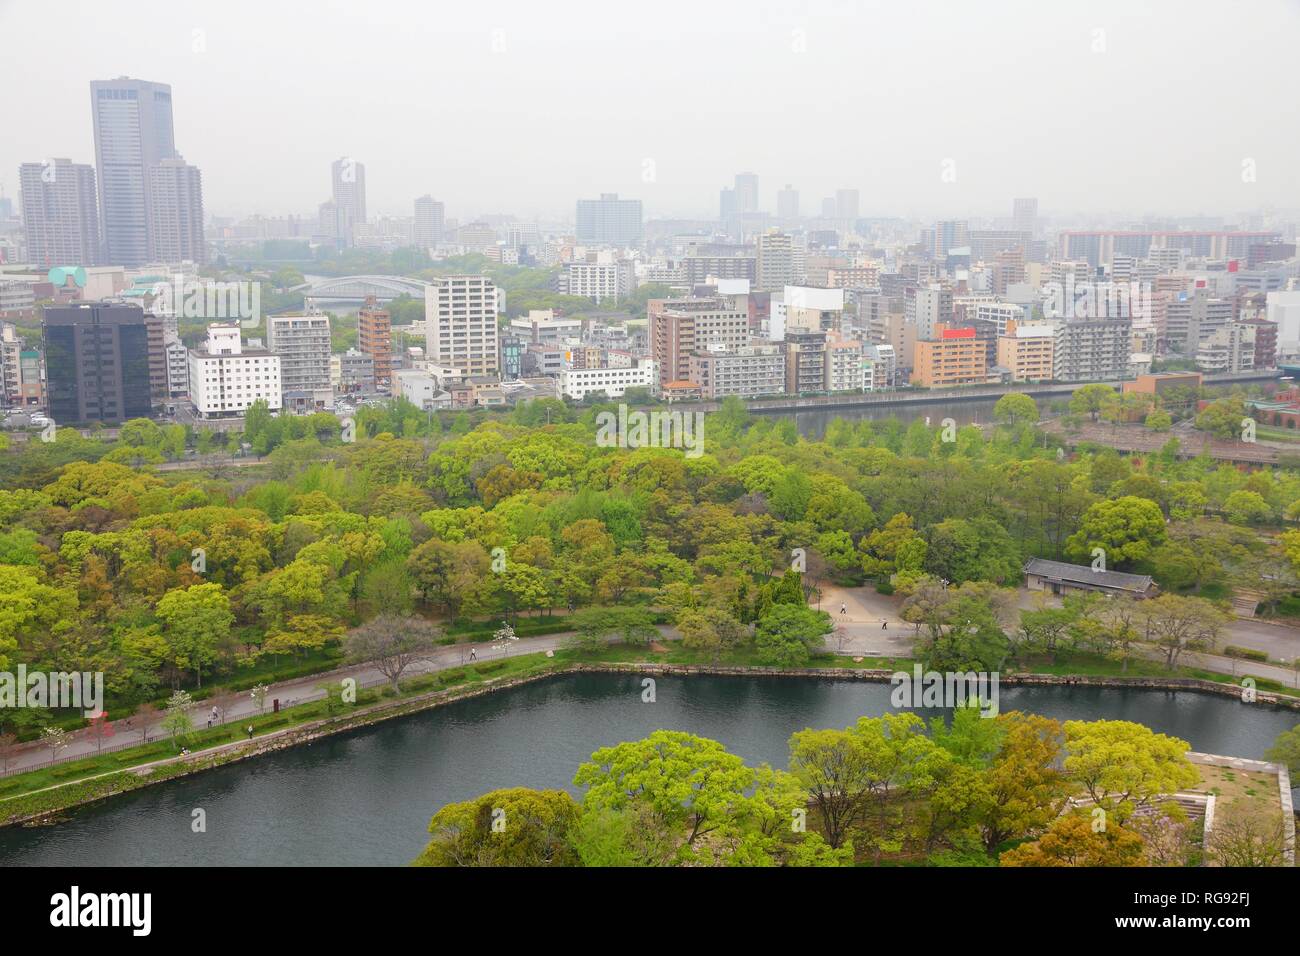 Osaka, Japan - skyline of famous city in the region Kansai. Modern metropolis - aerial view with air pollution smog haze. Stock Photo